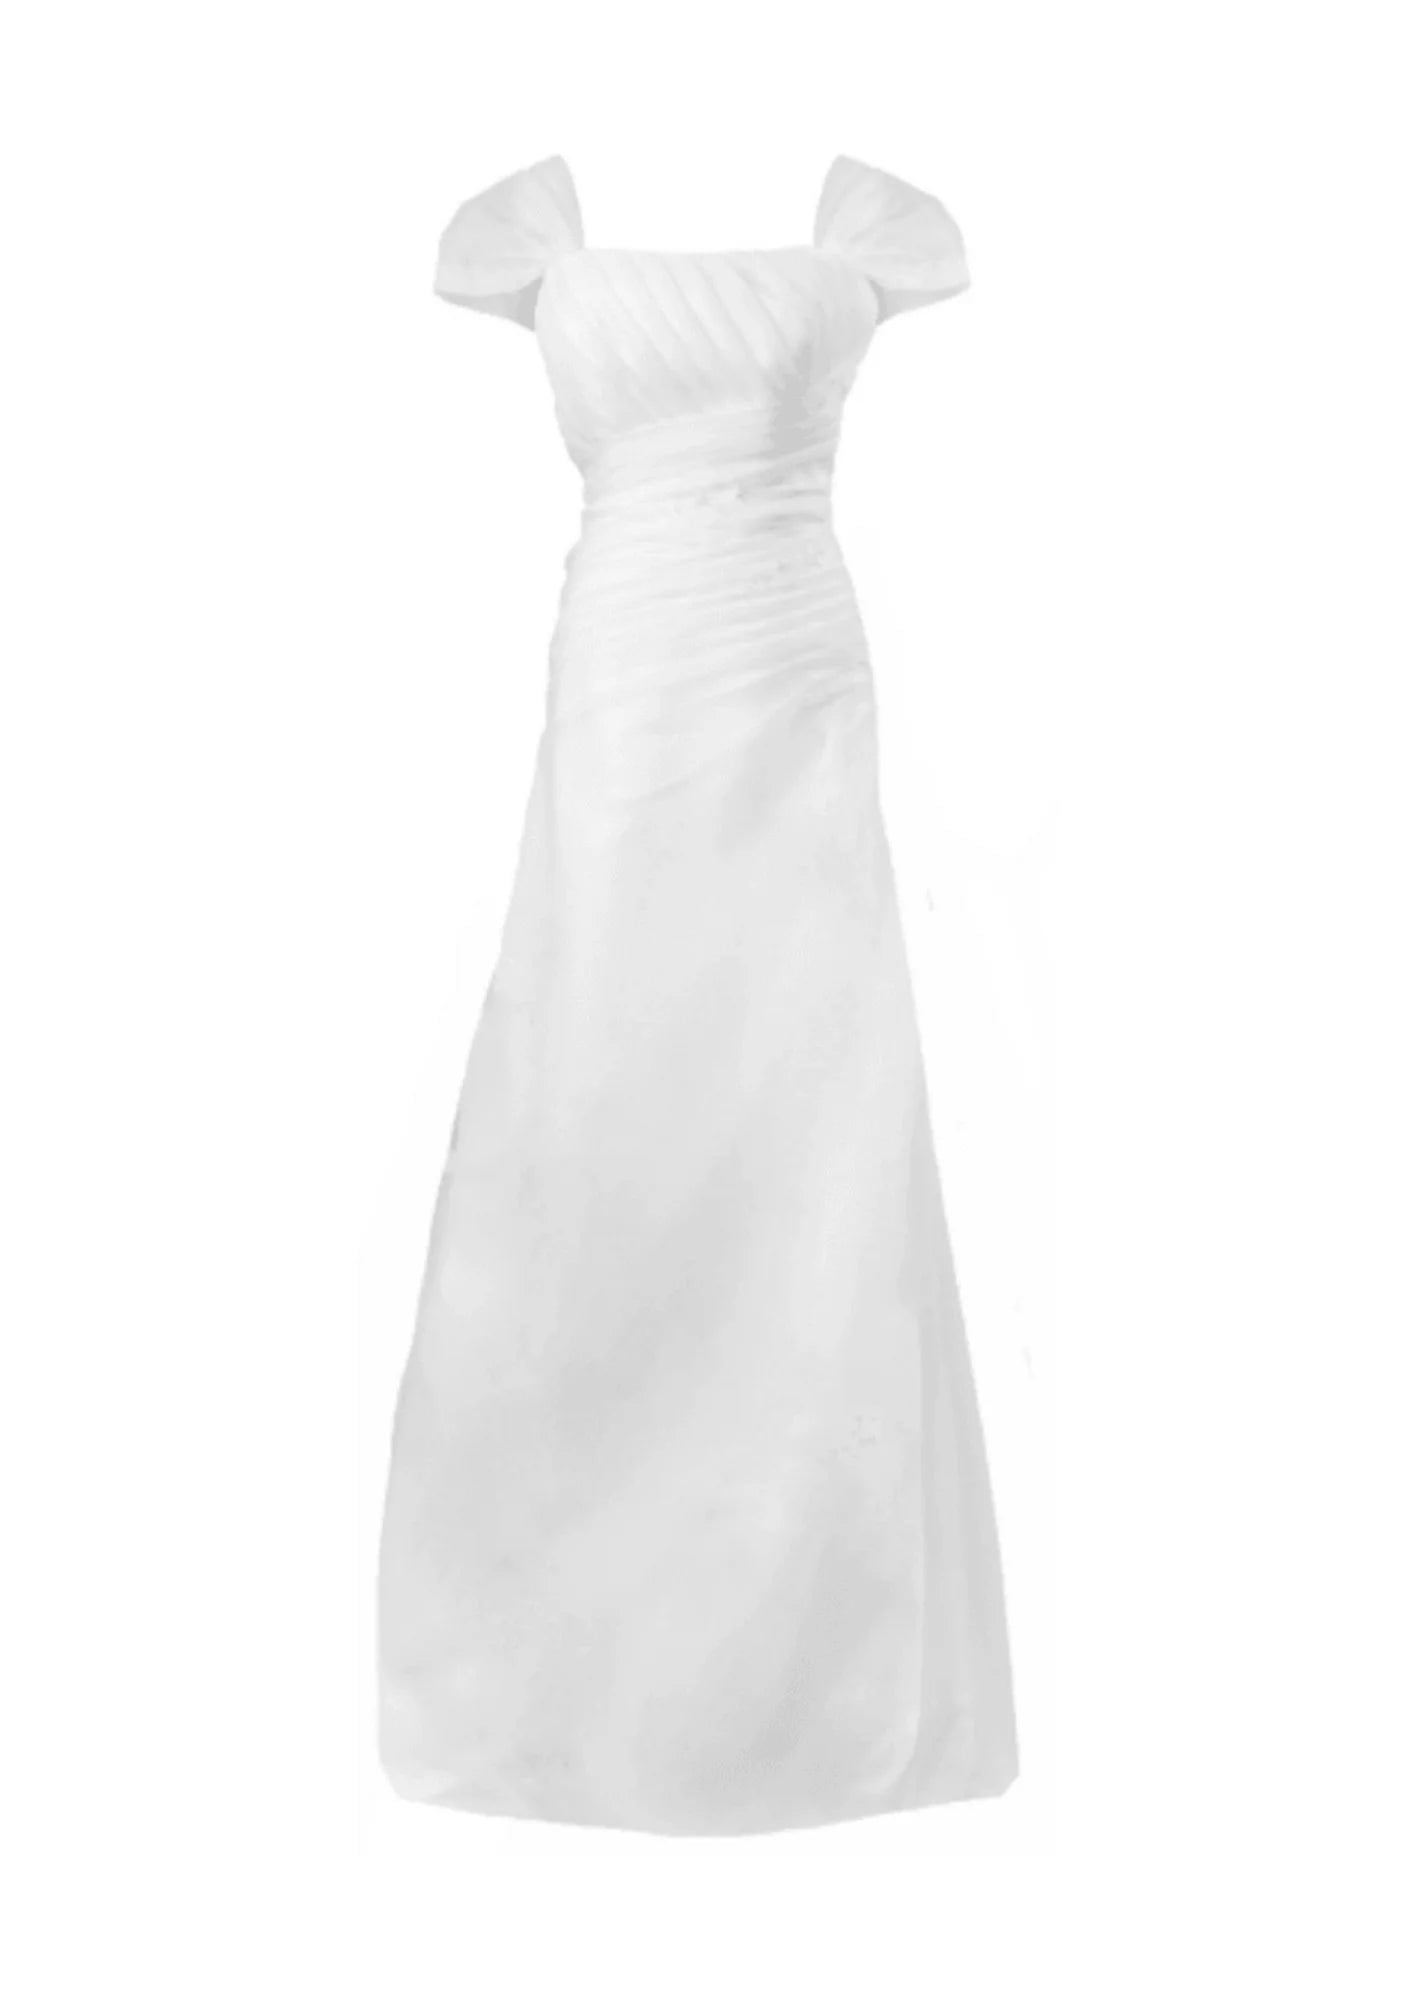 Robe de mariée blanche avec train long